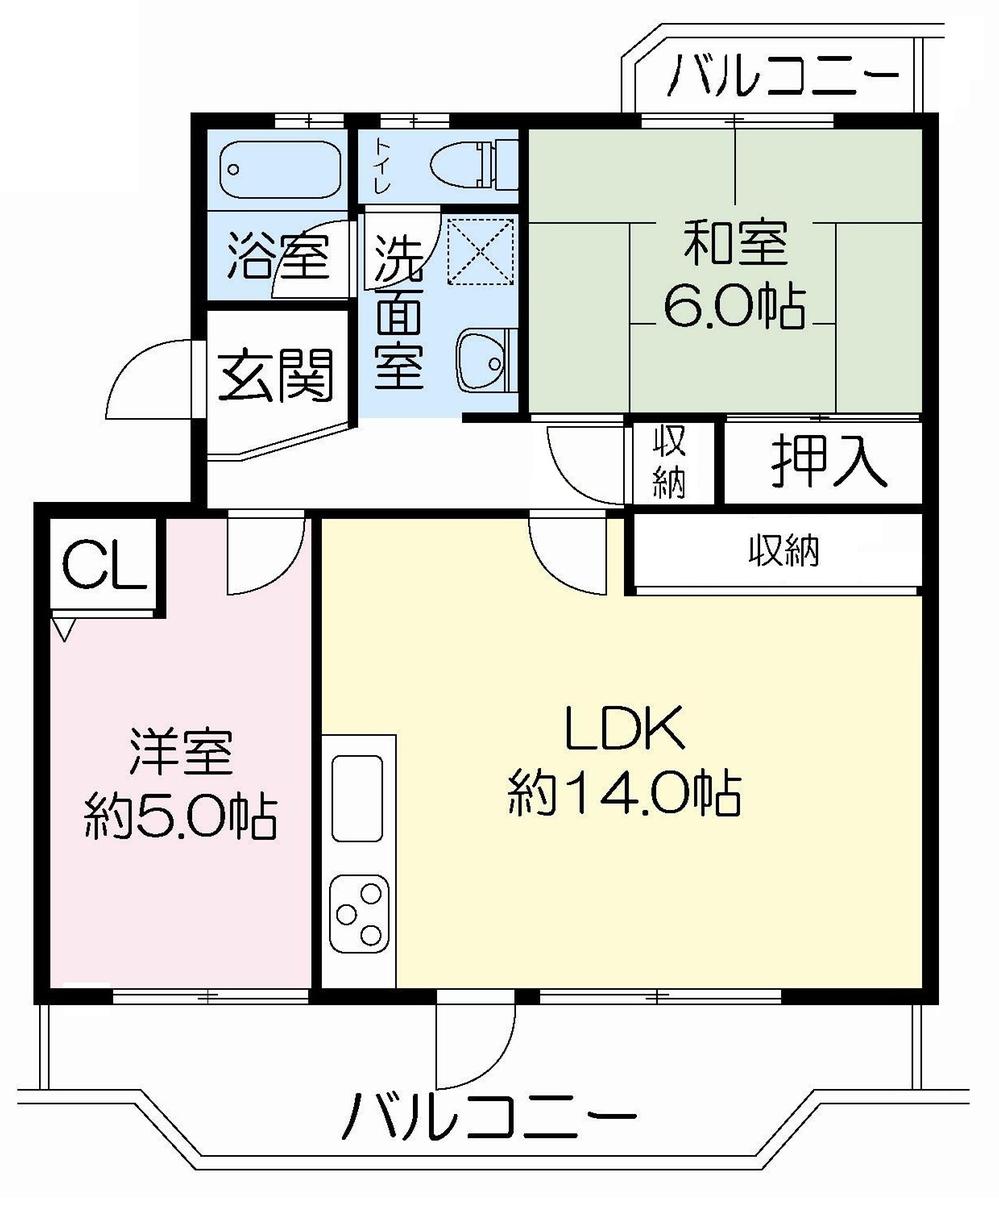 Floor plan. 2LDK, Price 7.7 million yen, Occupied area 61.35 sq m , Balcony area 11.94 sq m LDK about 14 Pledge